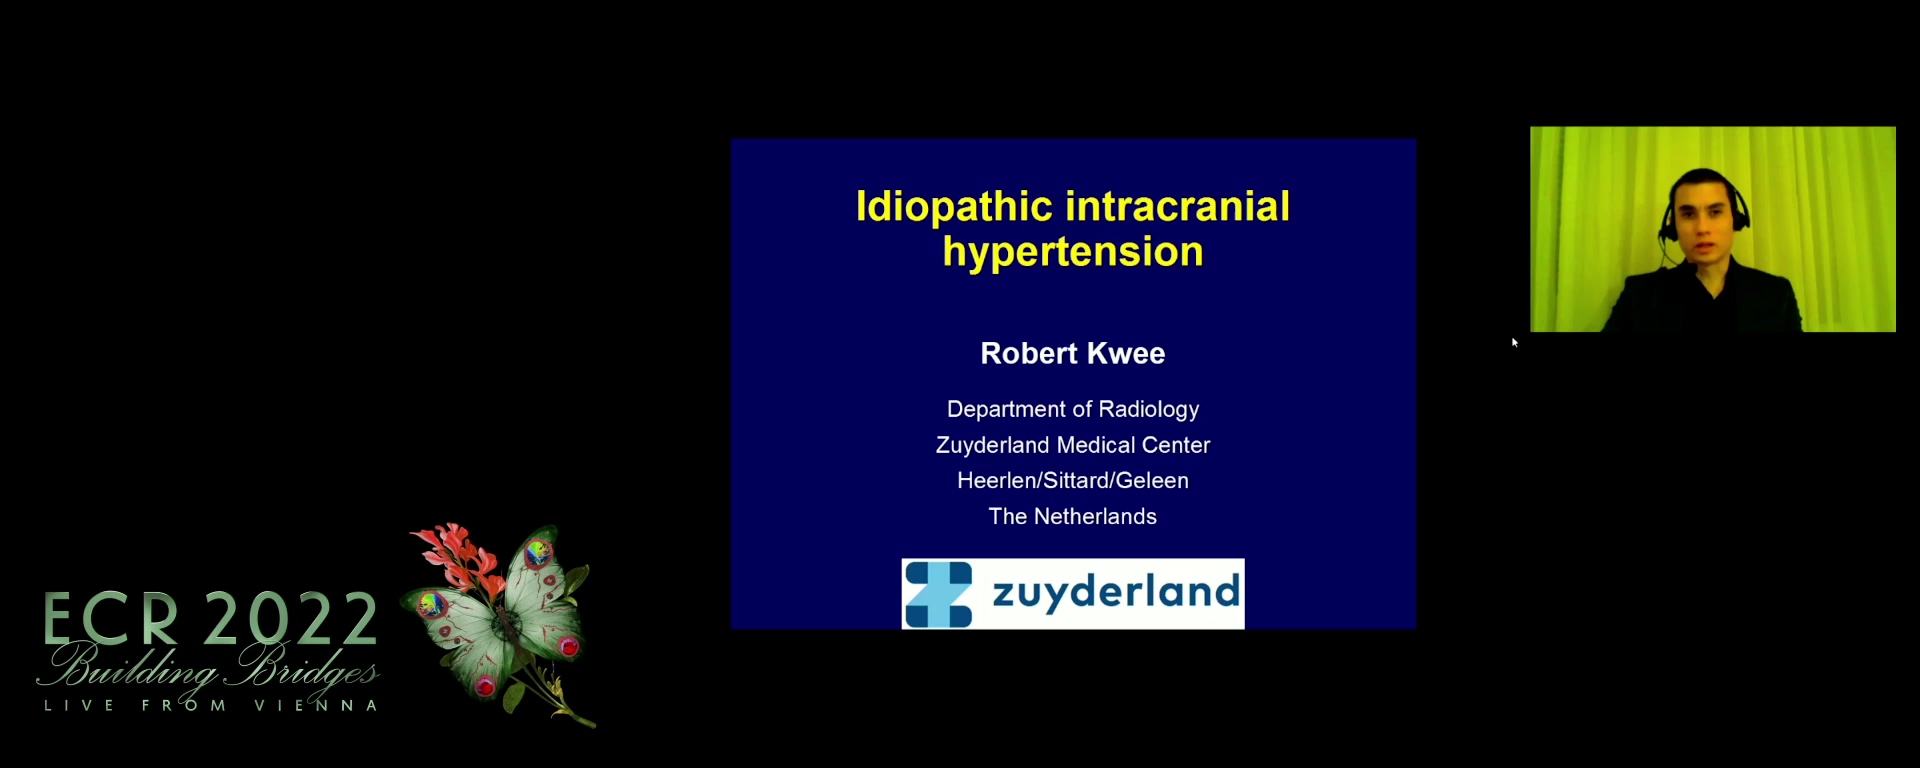 Idiopathic intracranial hypertension